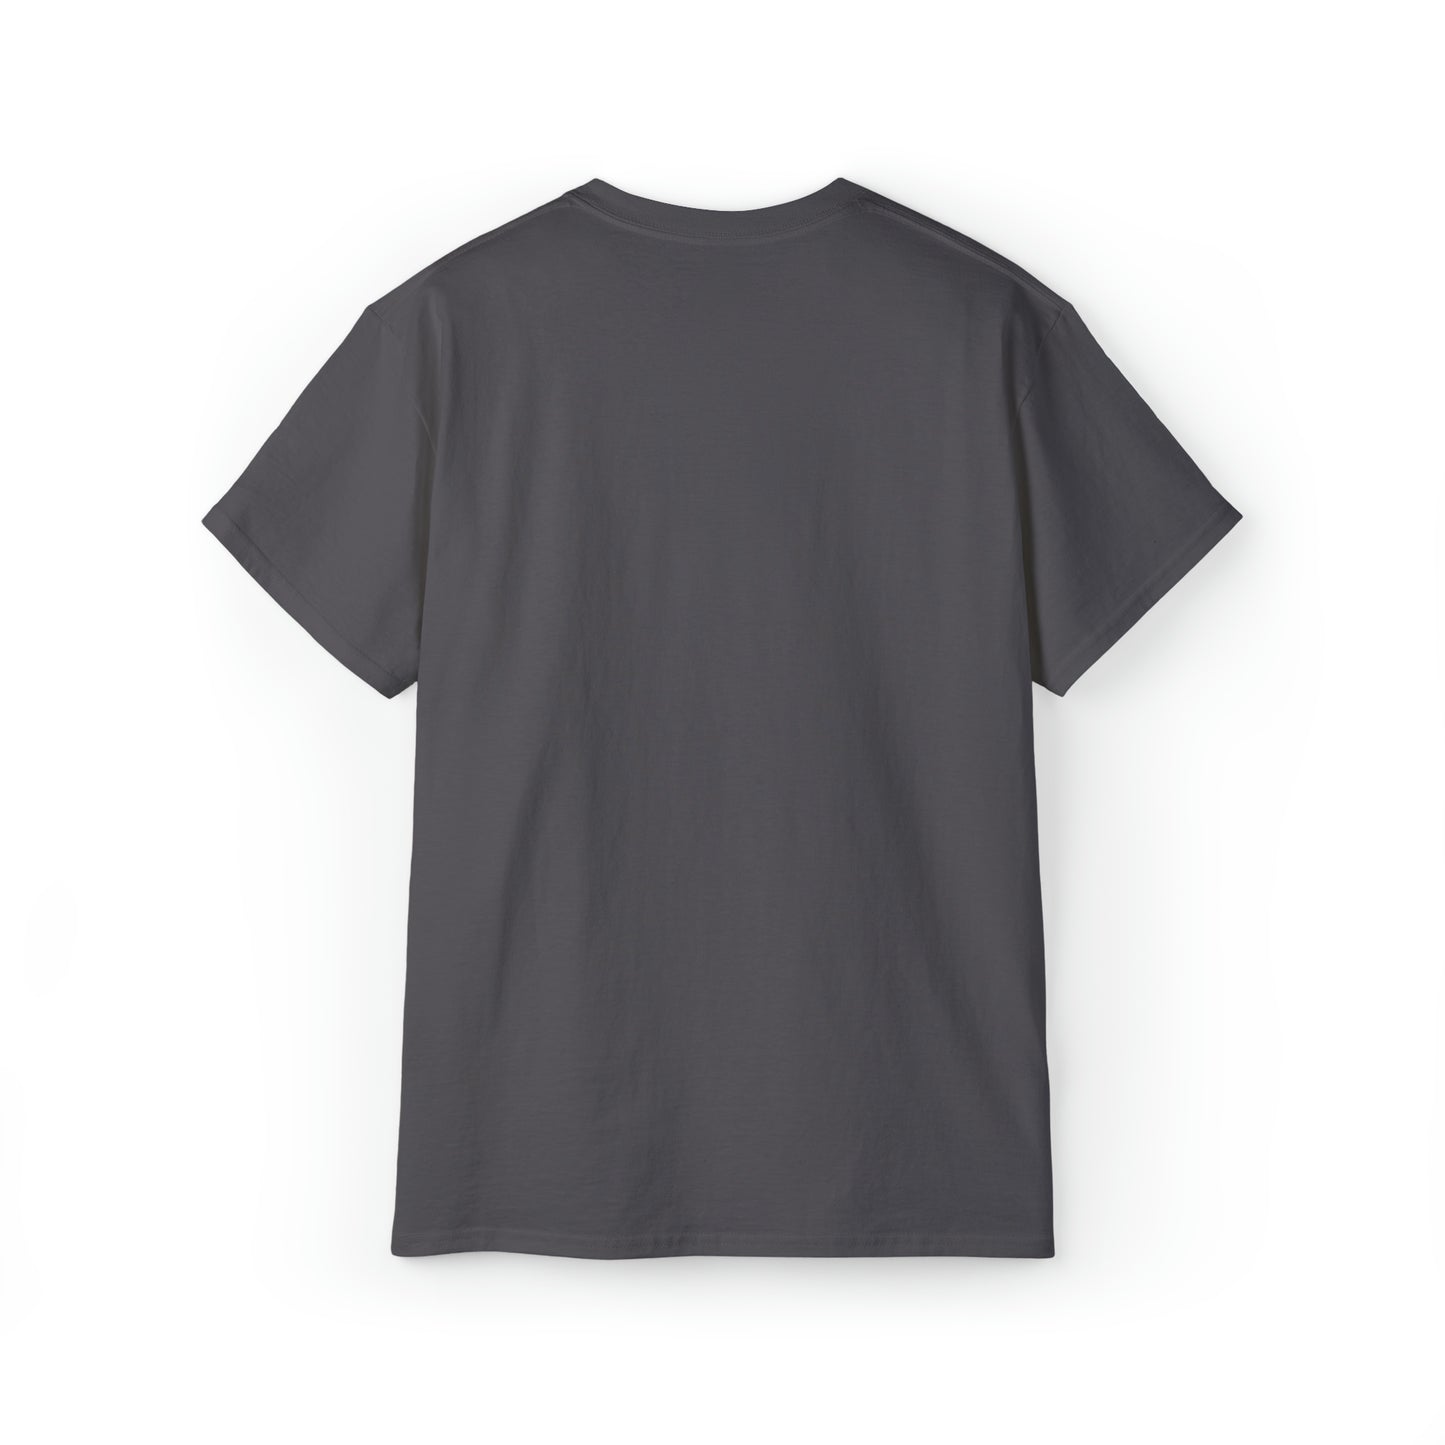 Camiseta unisex de ultra algodón.